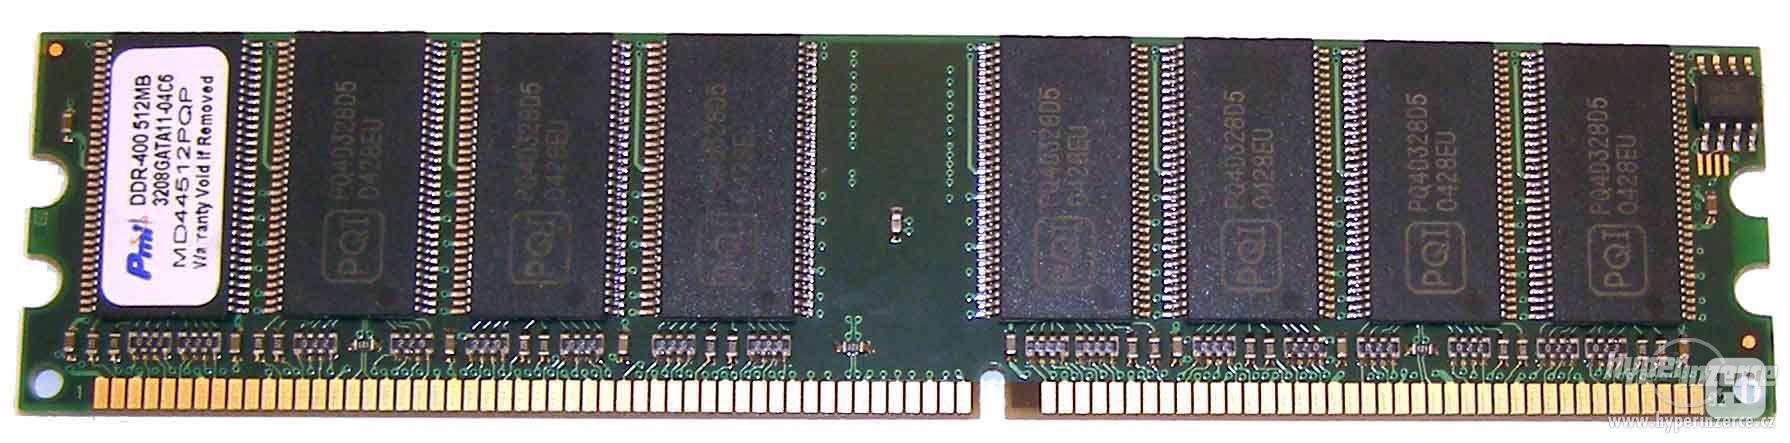 Paměť zn.Pmi DIMM DDR 400MHz 512MB PC3200 - foto 1